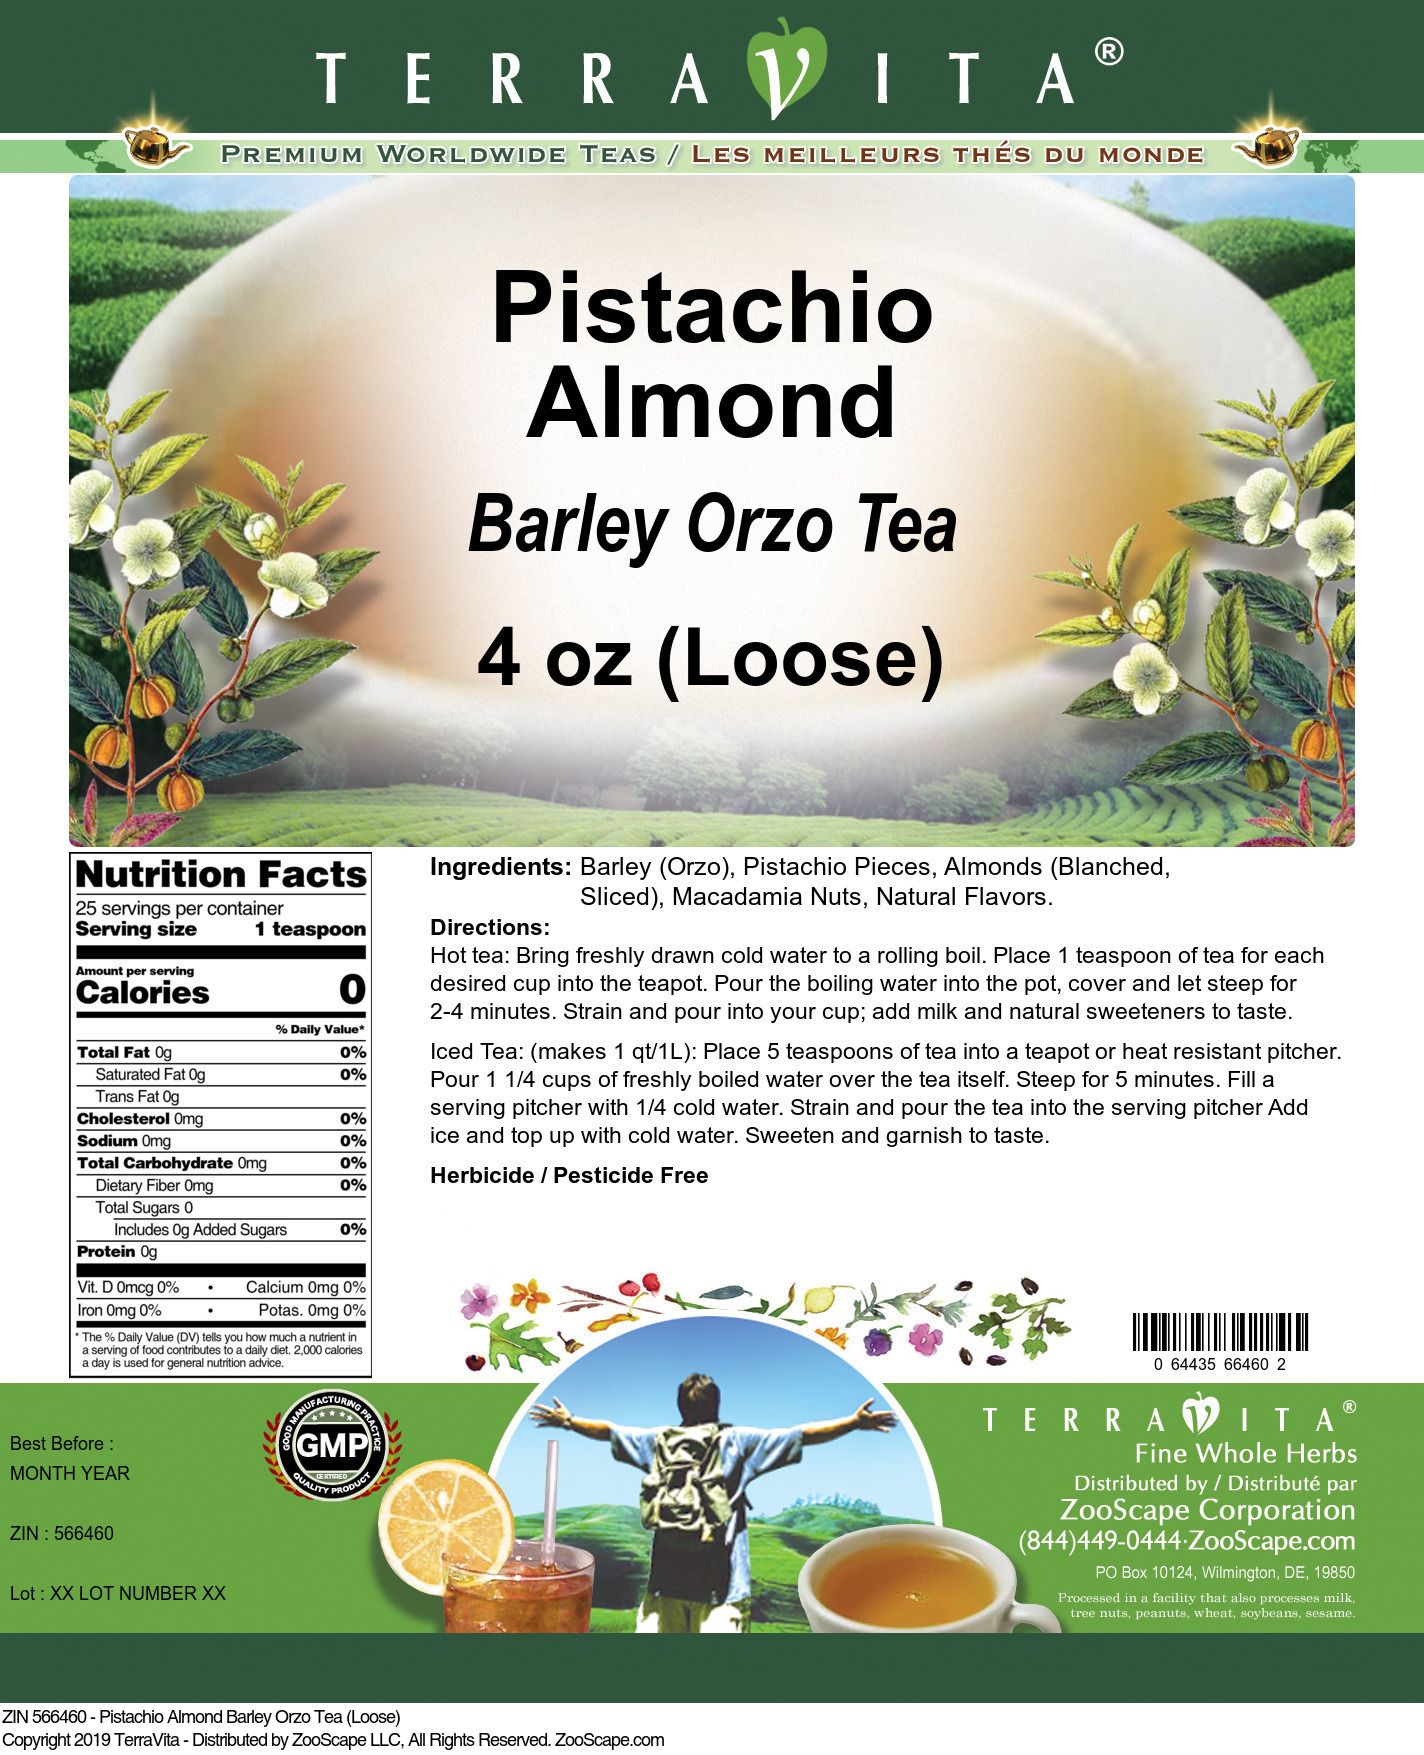 Pistachio Almond Barley Orzo Tea (Loose) - Label